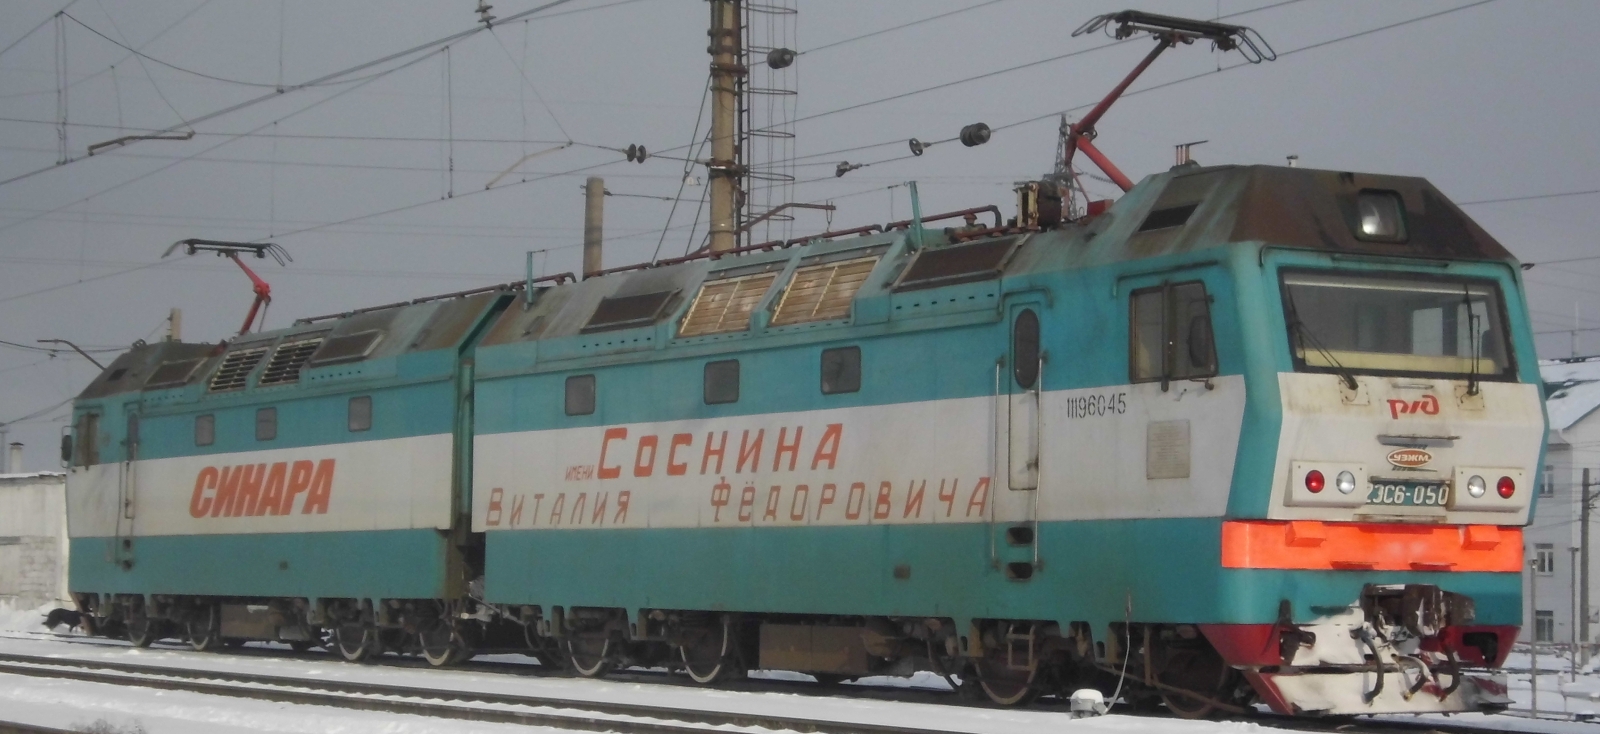 2ЭС6 with a large inscription “Sosnin Vitaly Fedorovich” in Chelyabinsk